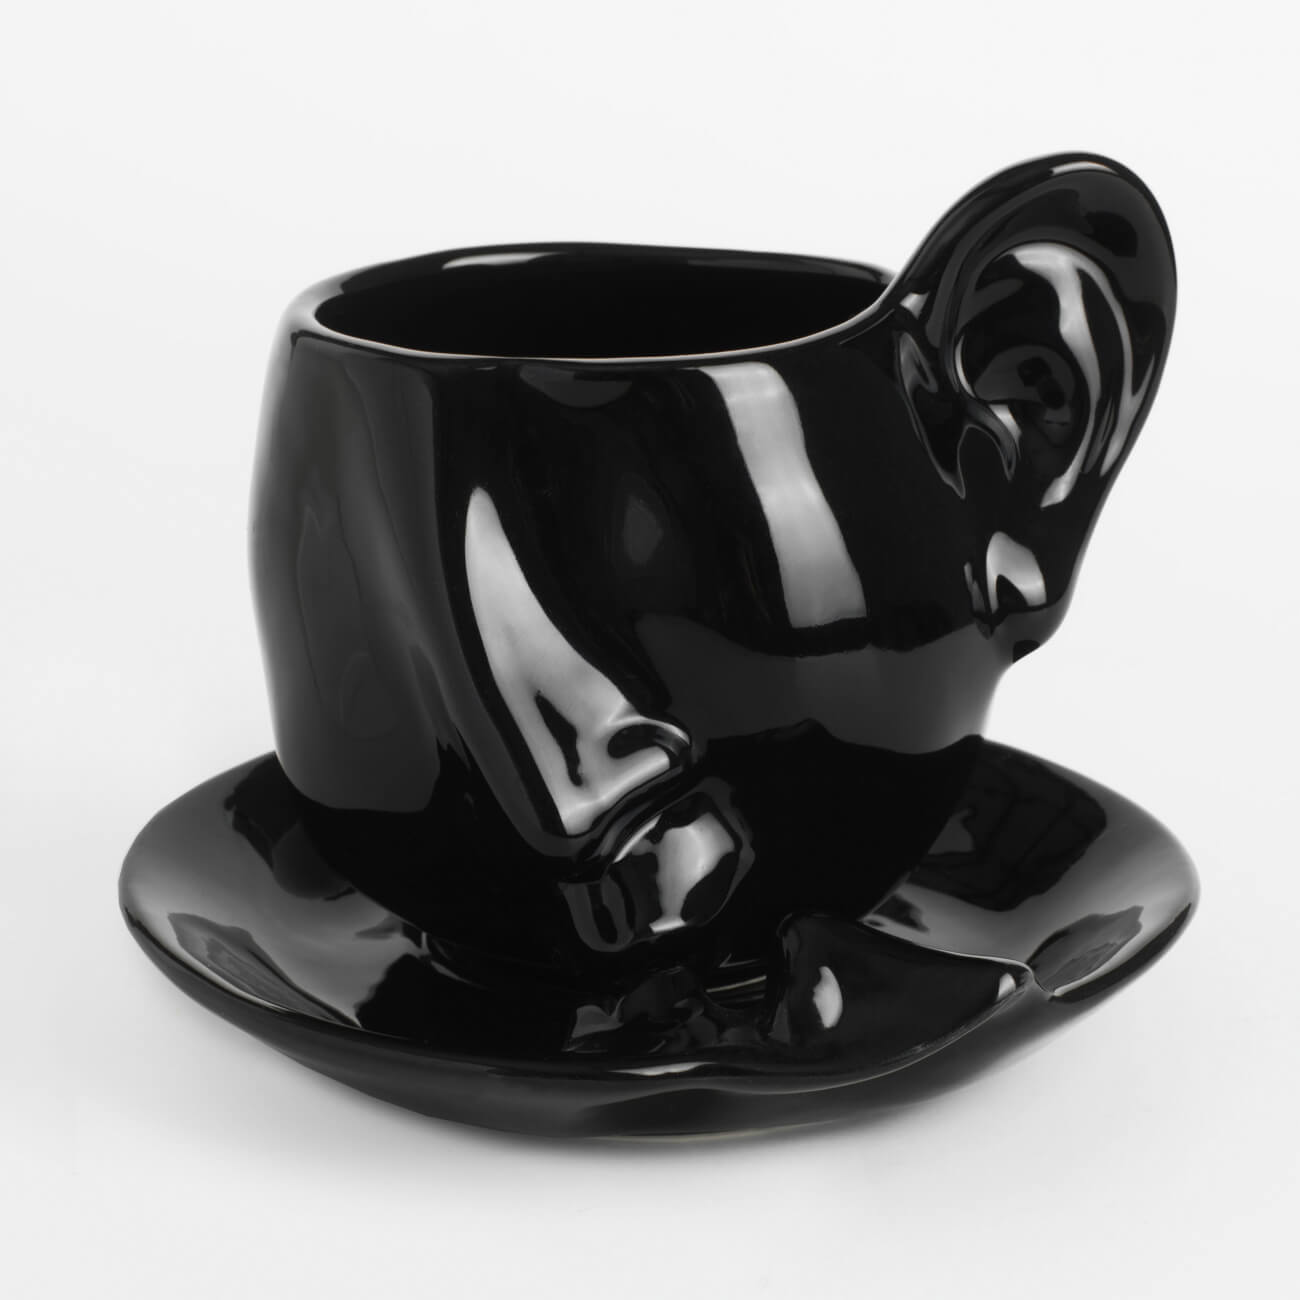 Пара чайная, 1 перс, 2 пр, 320 мл, керамика, черная, Поцелуй, Baise пара чайная чашка блюдце 240 мл tudor tu9999 3